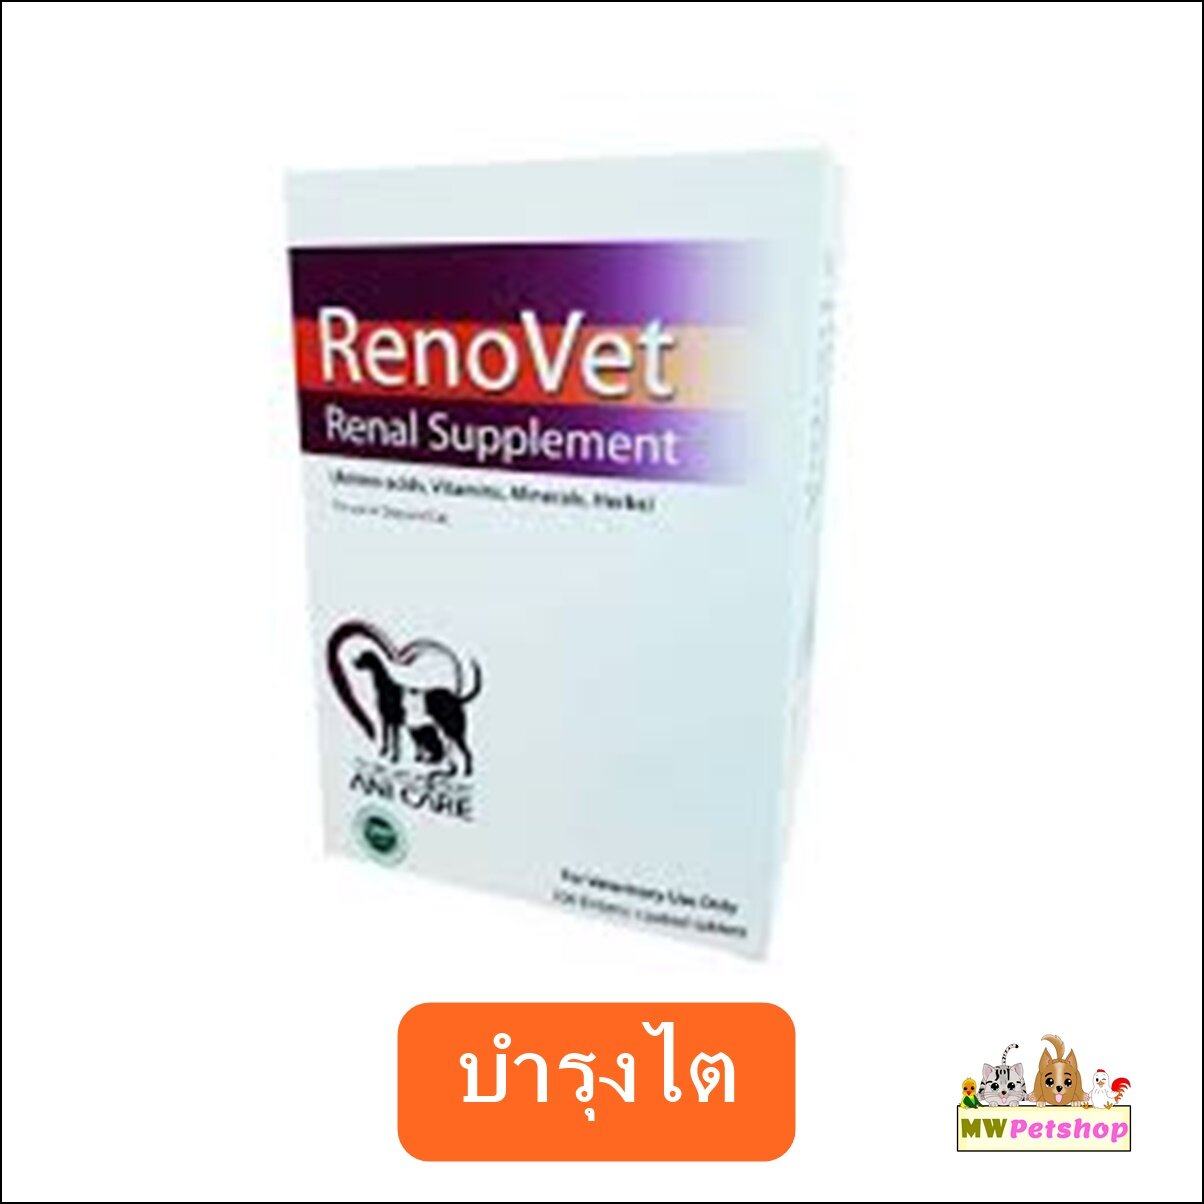 Renovet Renal Supplement วิตามิน บำรุงไต (1กล่อง) EXP14/06/22